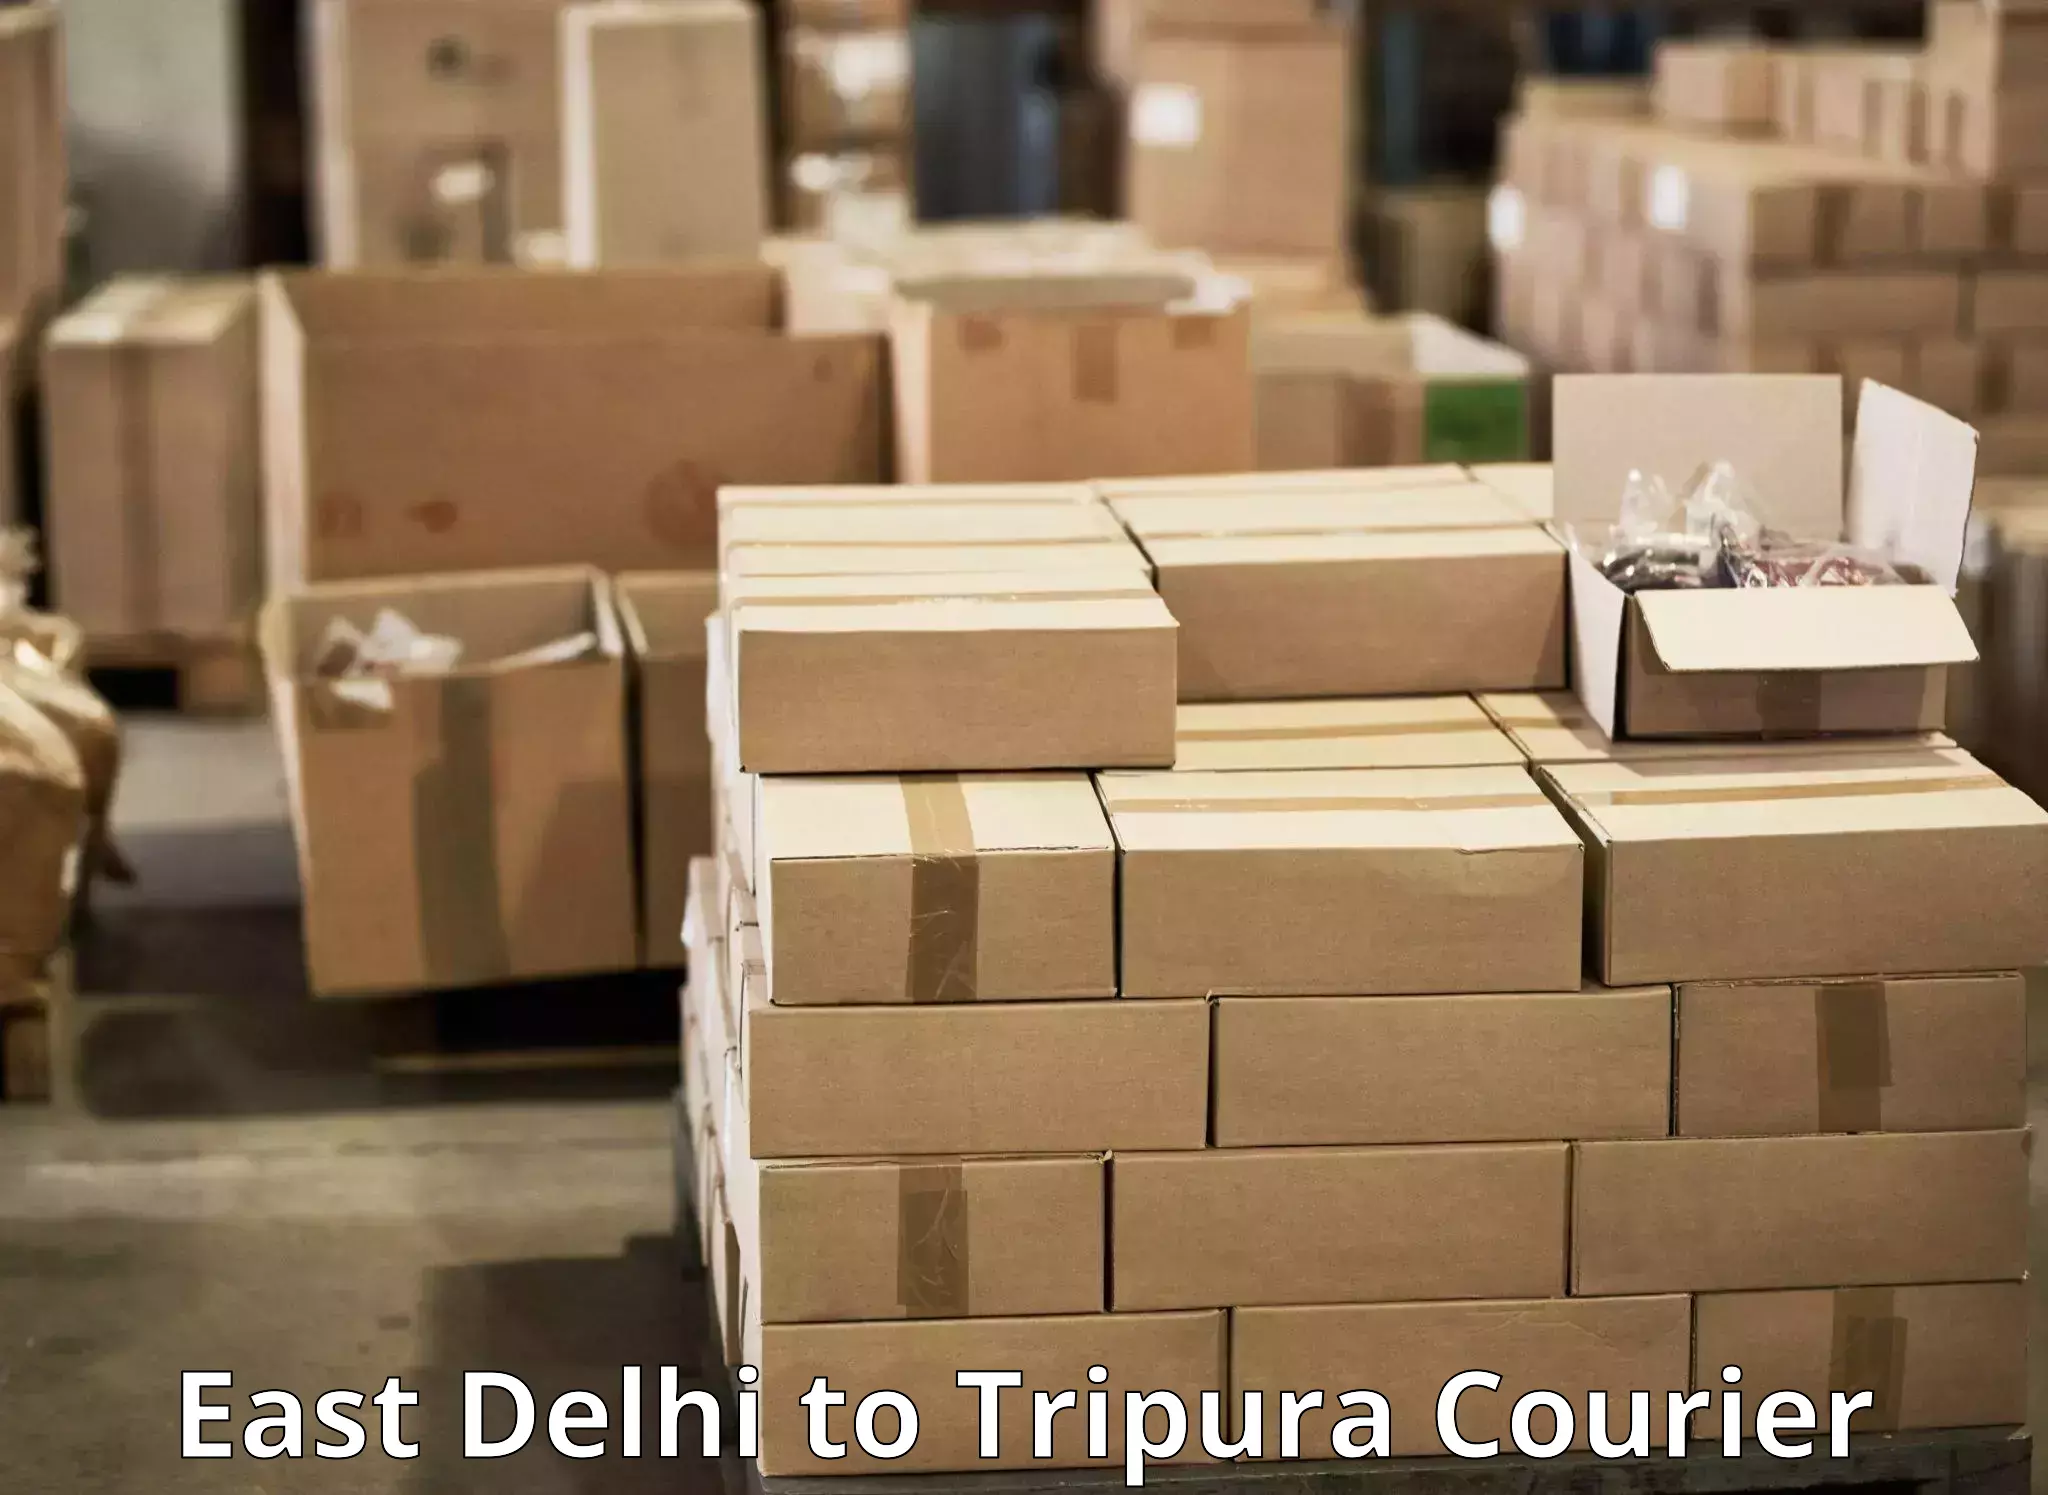 Advanced shipping network East Delhi to Udaipur Tripura